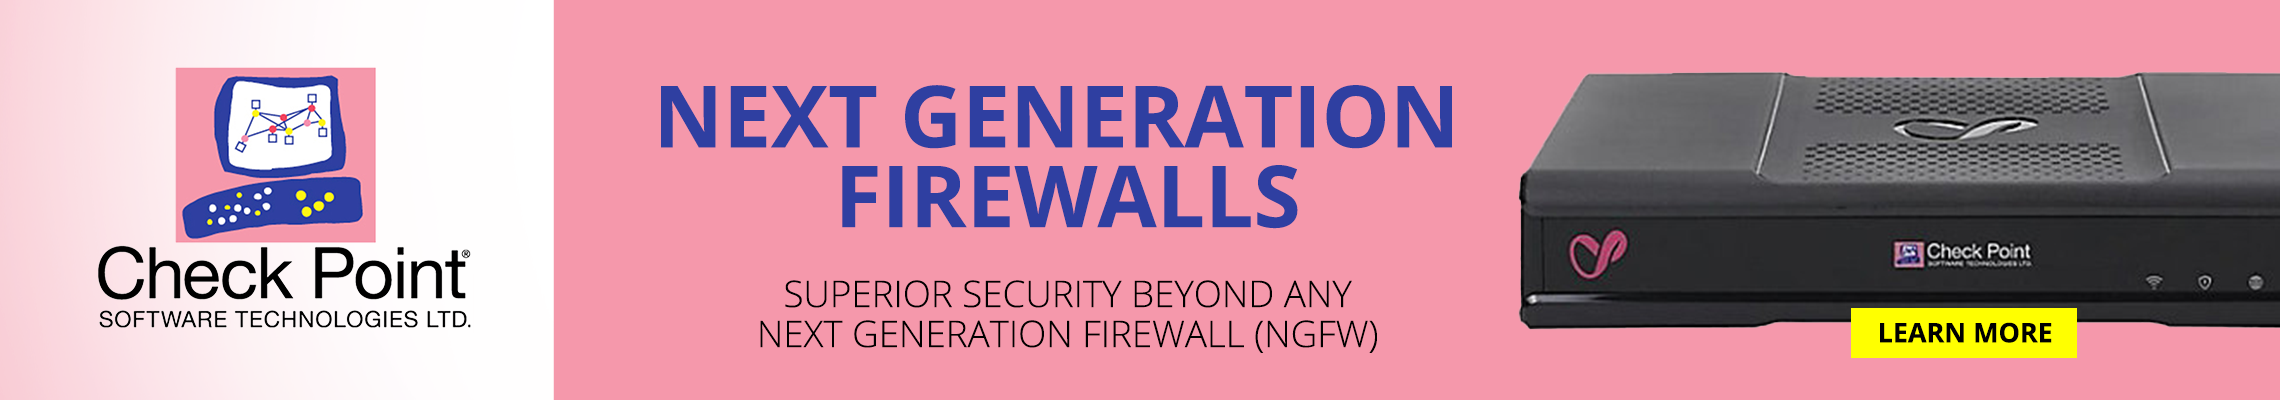 Check Point Next Generation Firewalls